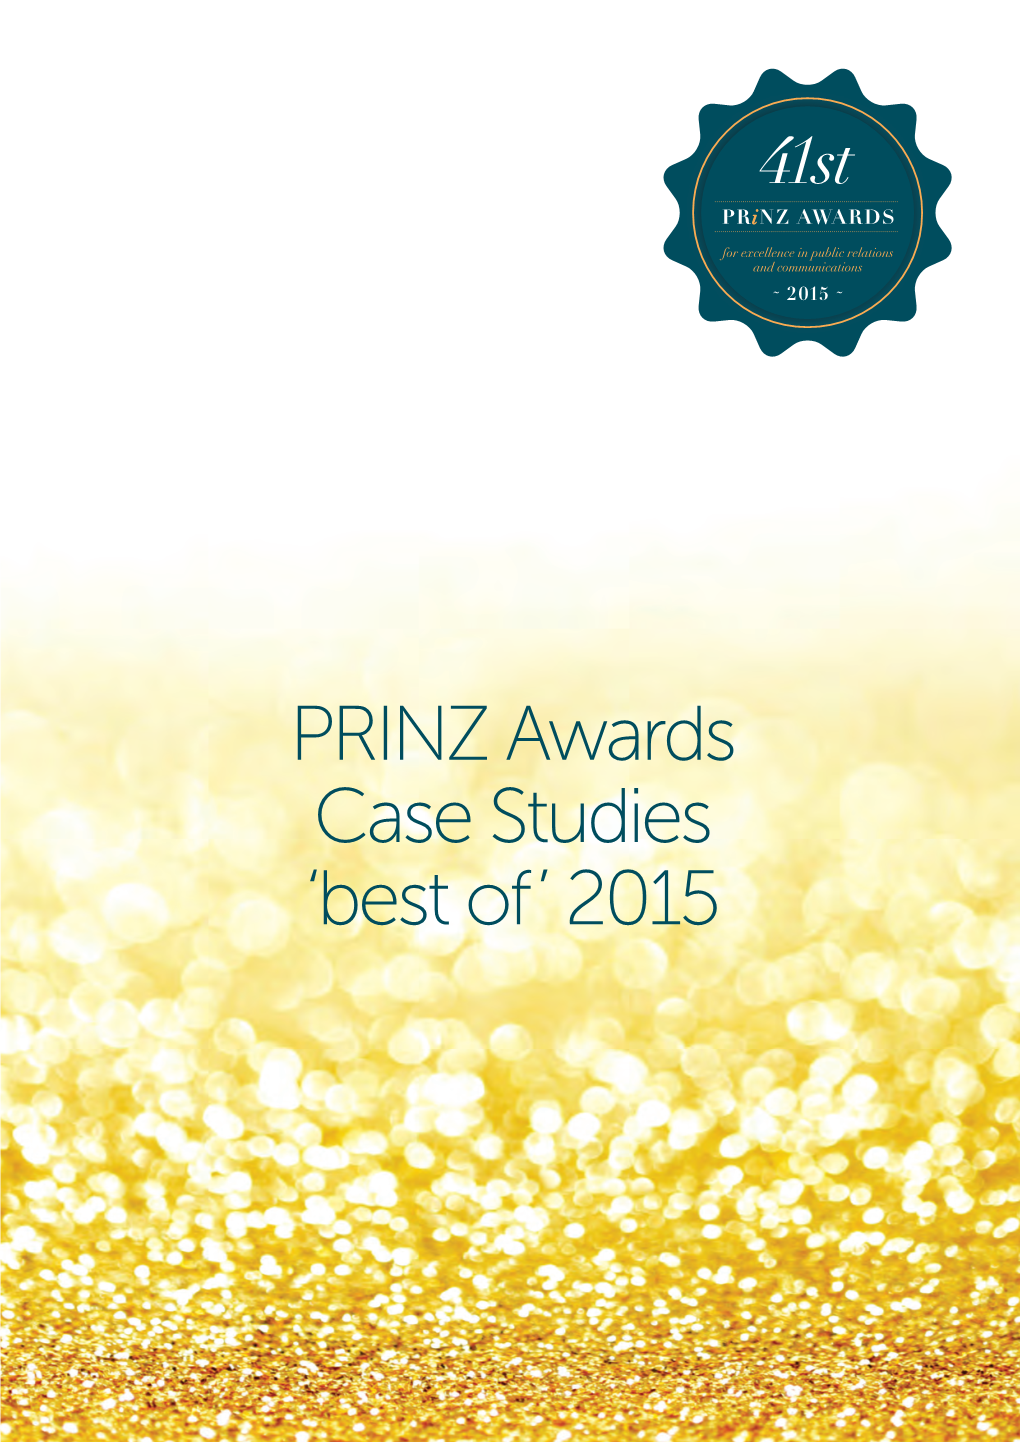 PRINZ Awards Case Studies ‘Best Of’ 2015 CORPORATE PUBLIC RELATIONS